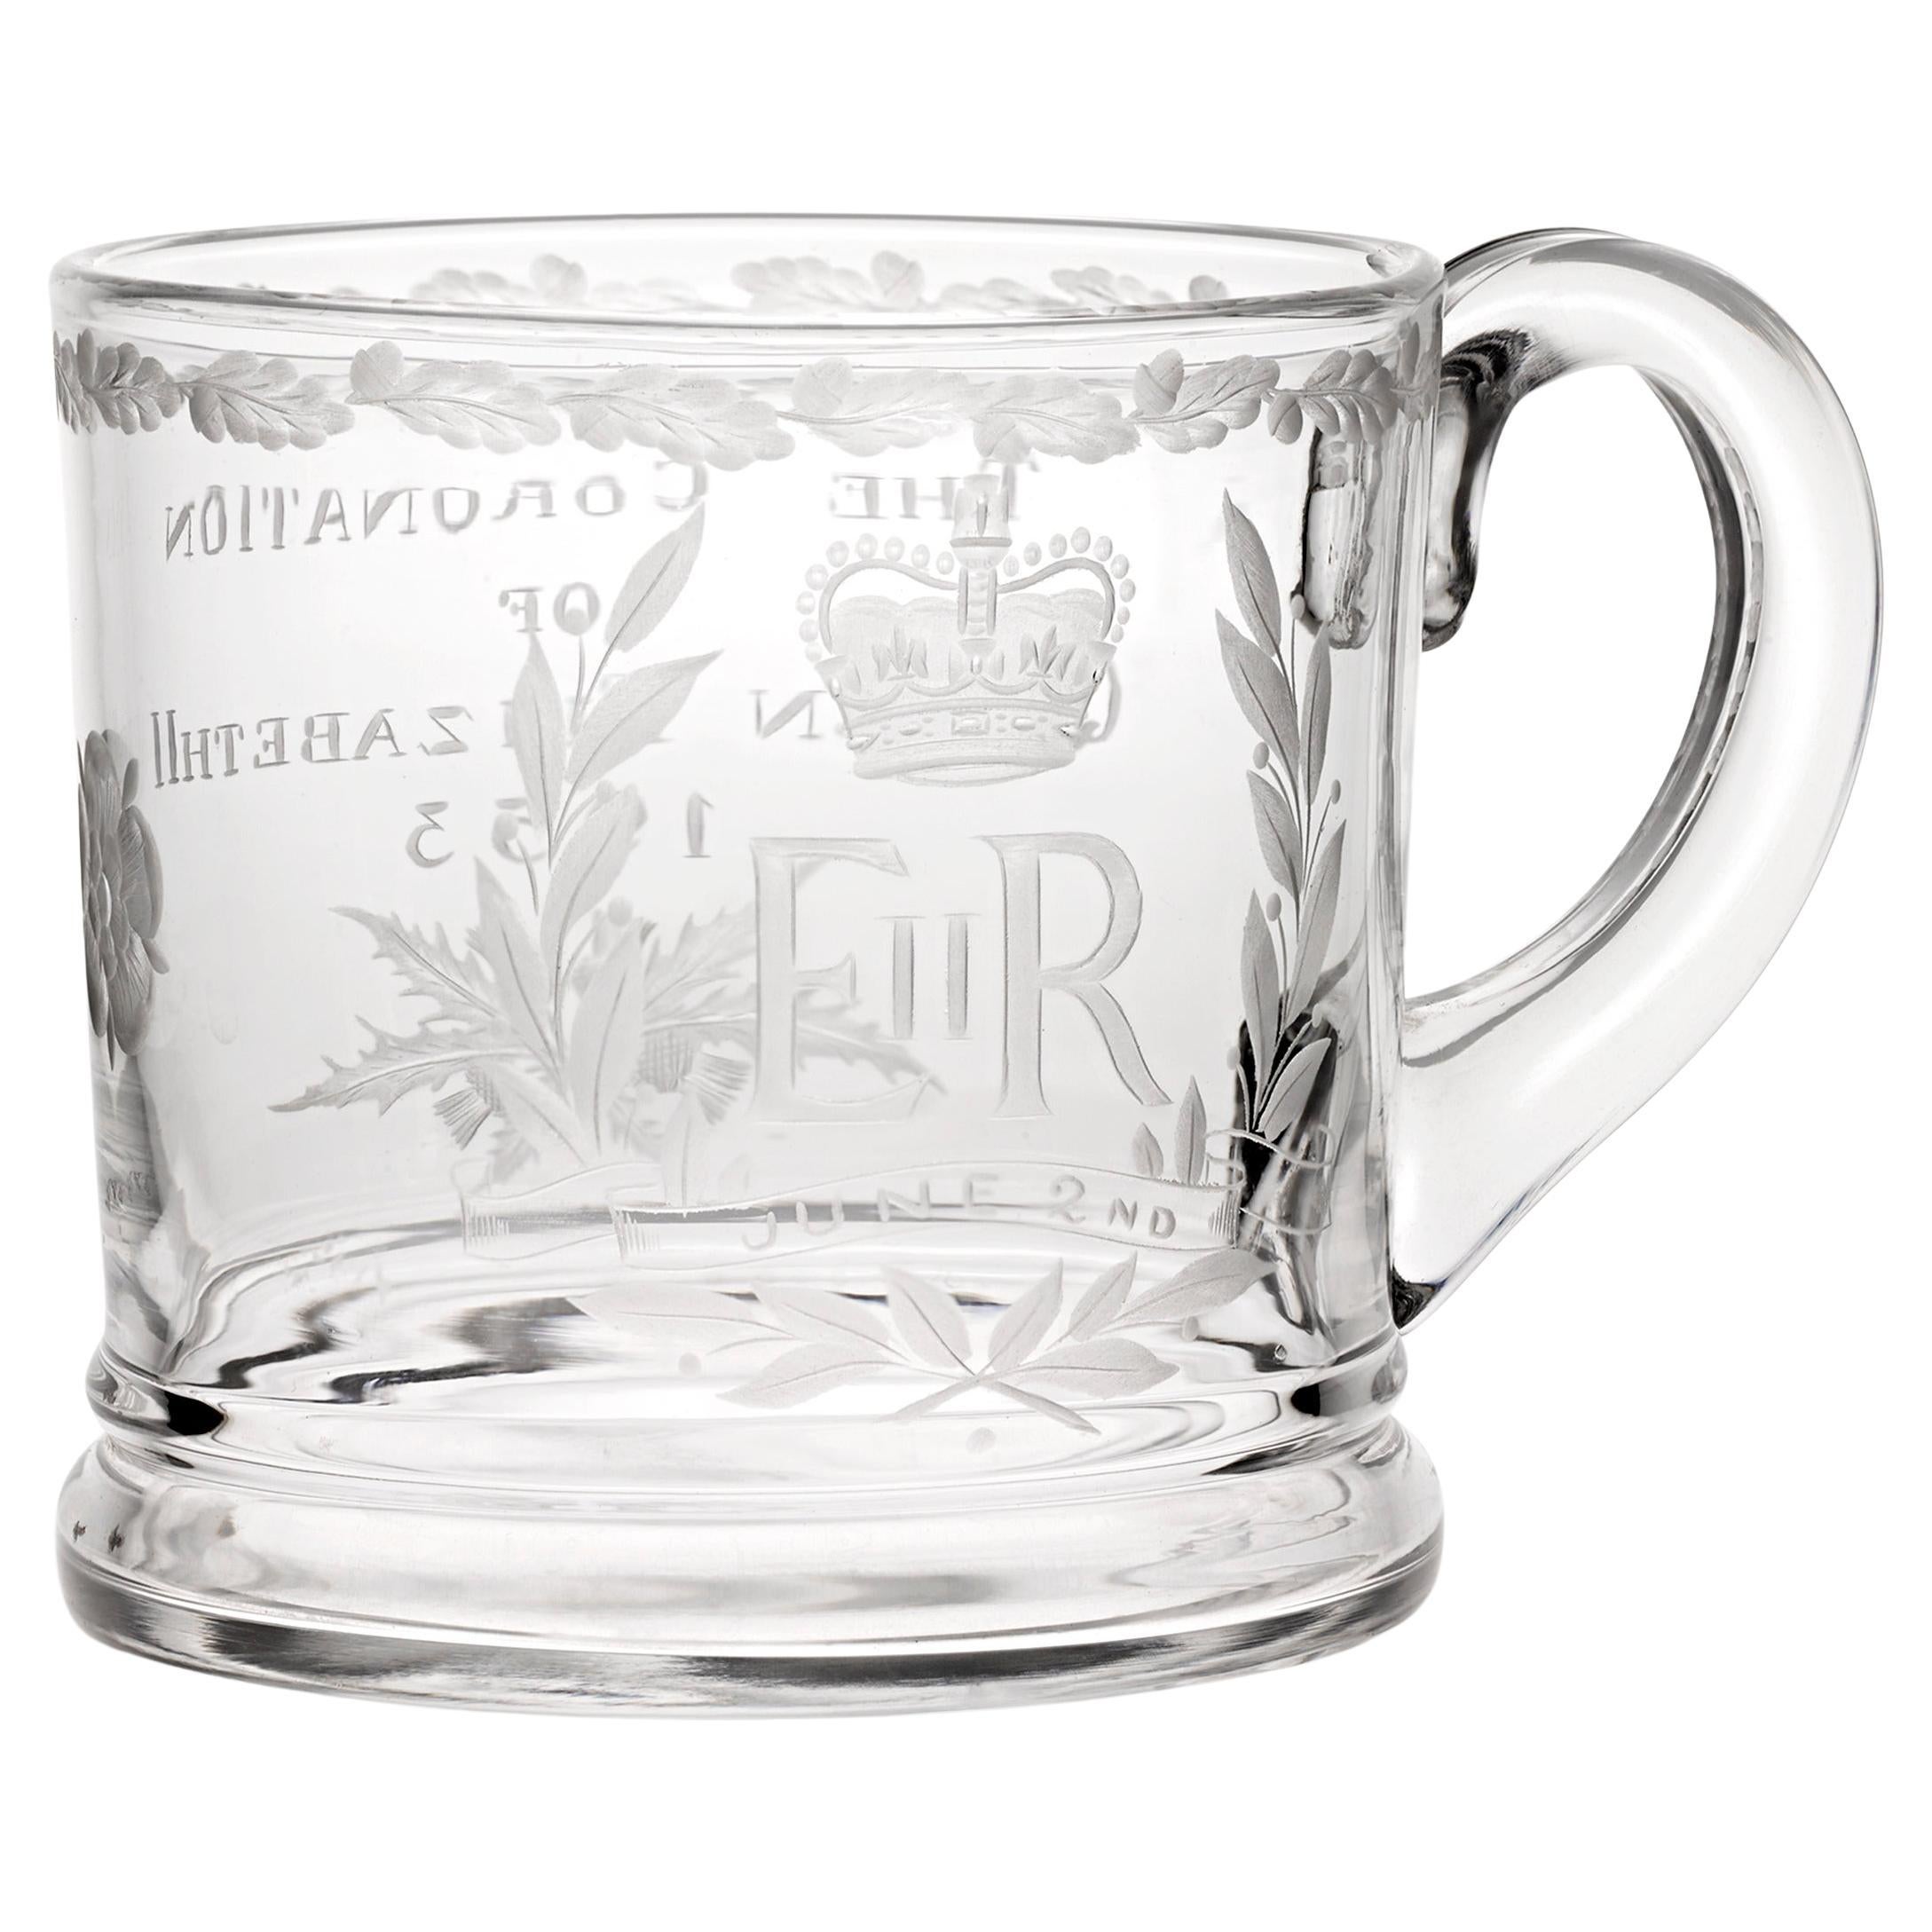 Coronation of Queen Elizabeth II Commemorative Glass For Sale